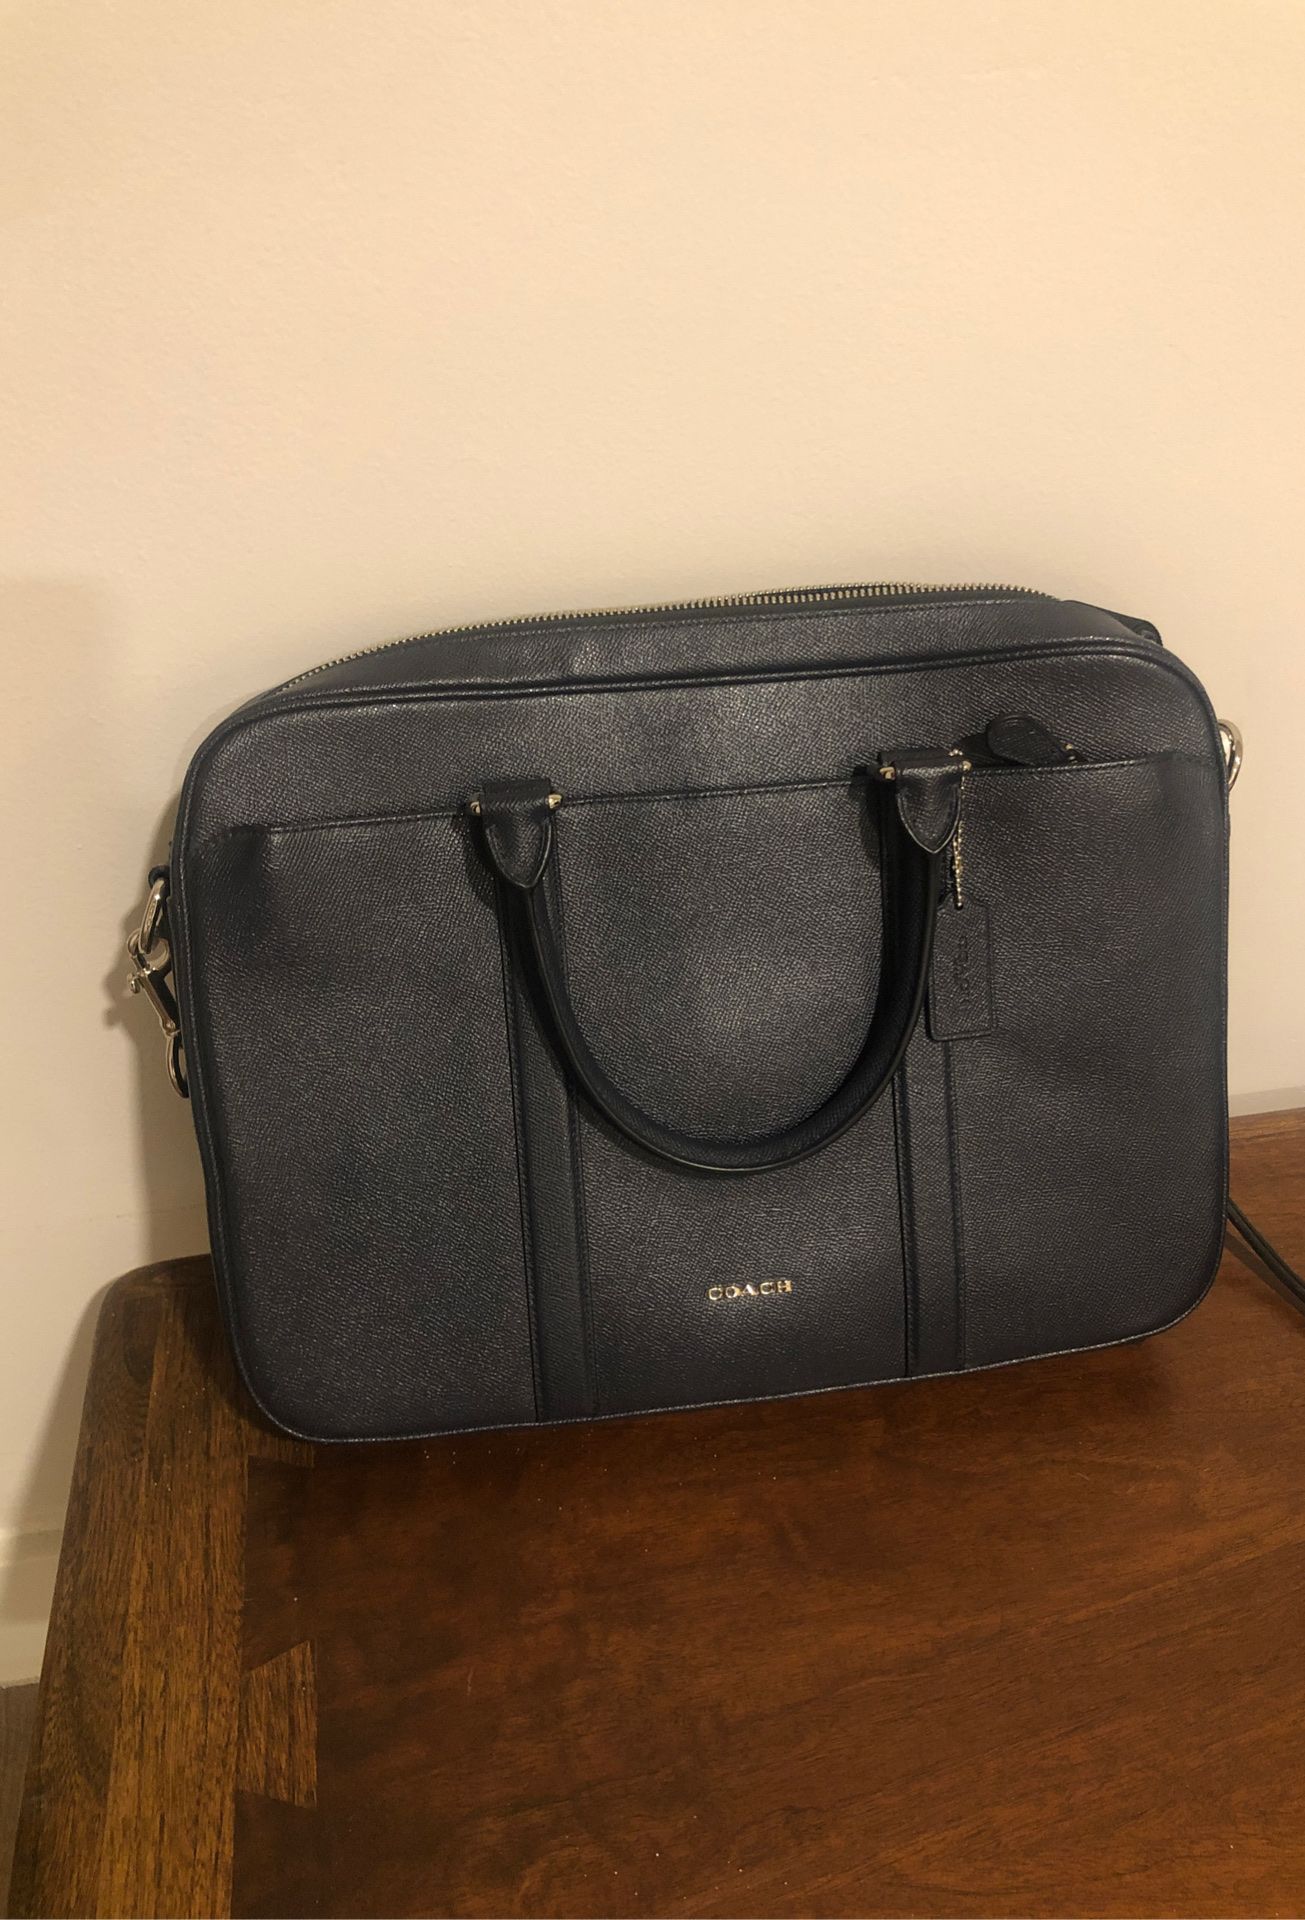 Coach briefcase